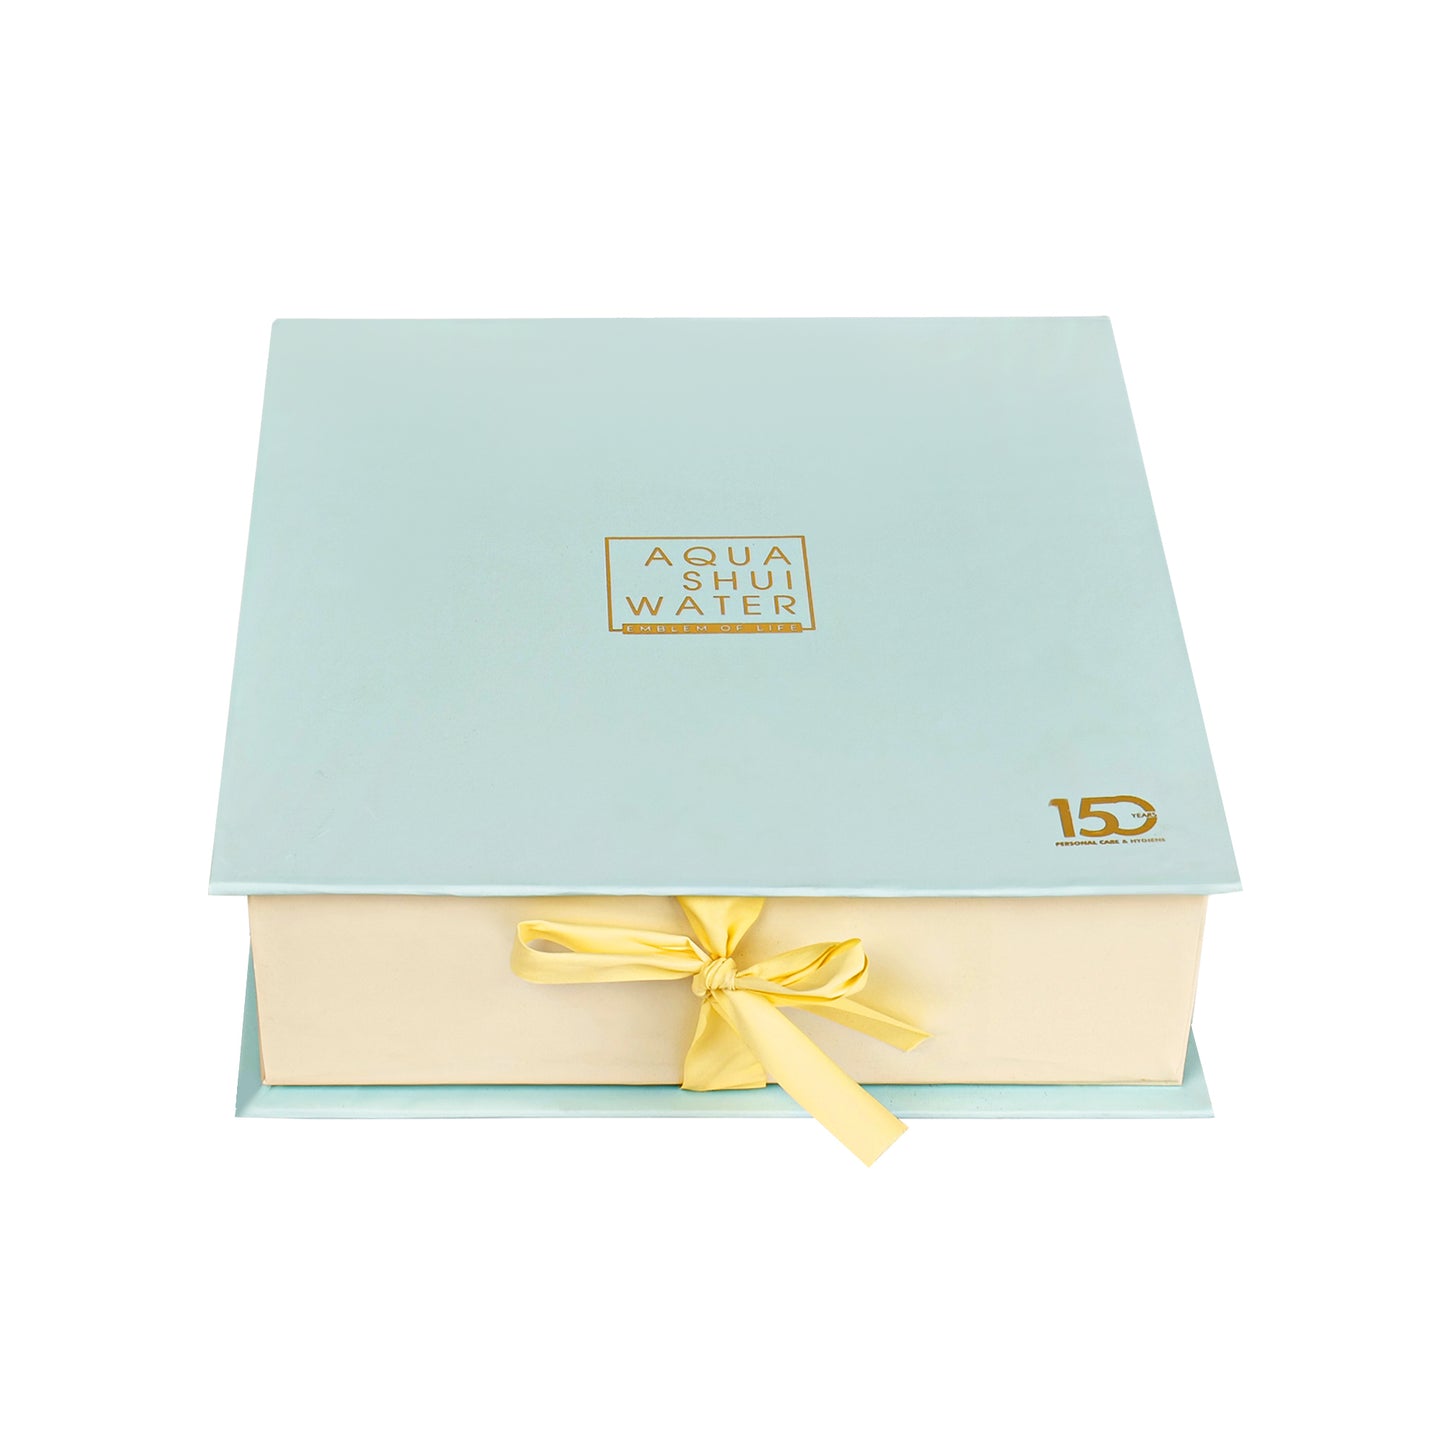 Aqua Shui Water Gift Set | Personalized Gift Box of 6 | Almond